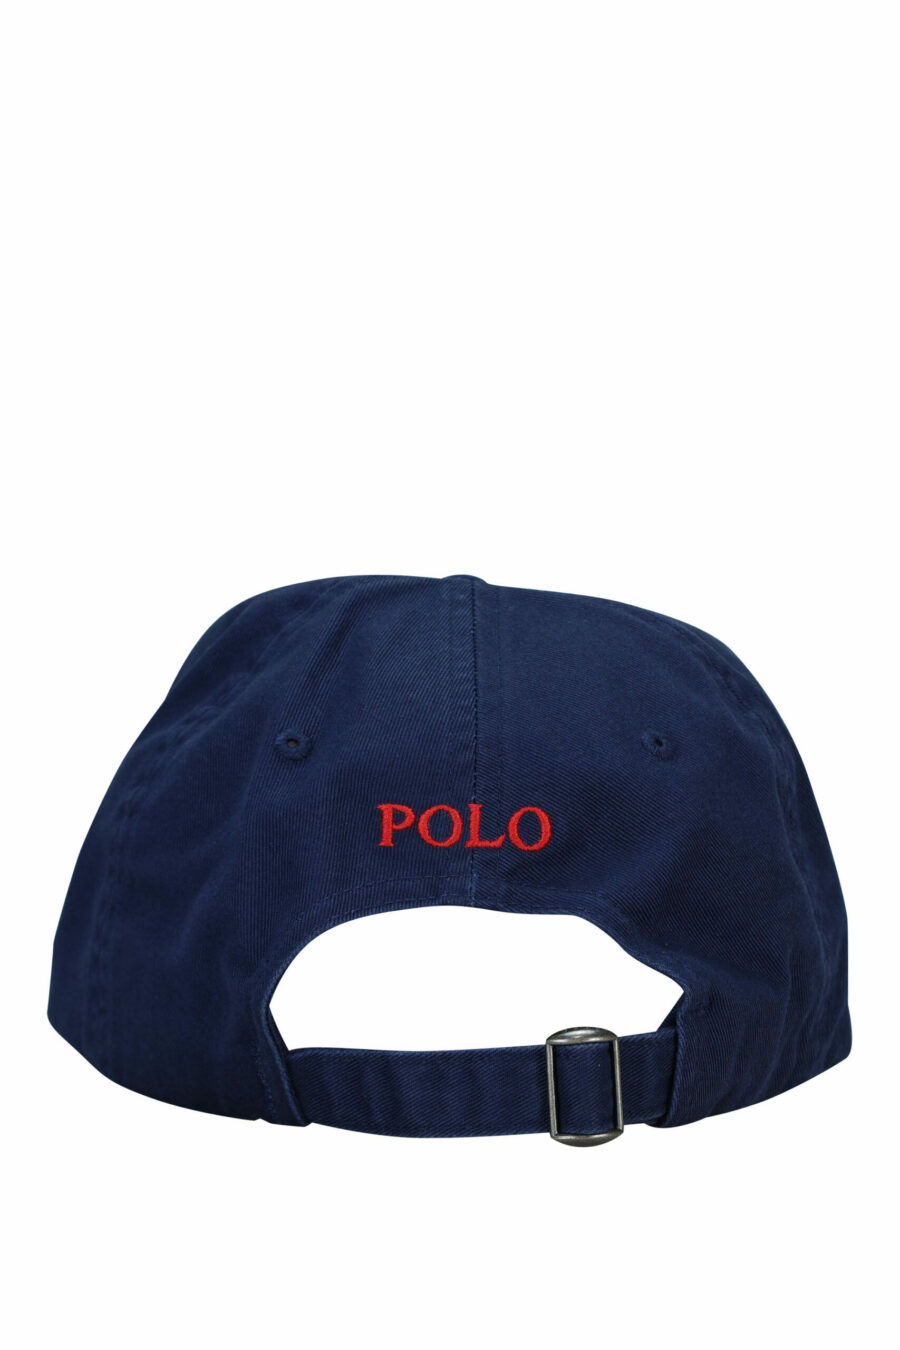 Dark blue cap with mini-logo "polo" - 3616531139422 1 scaled